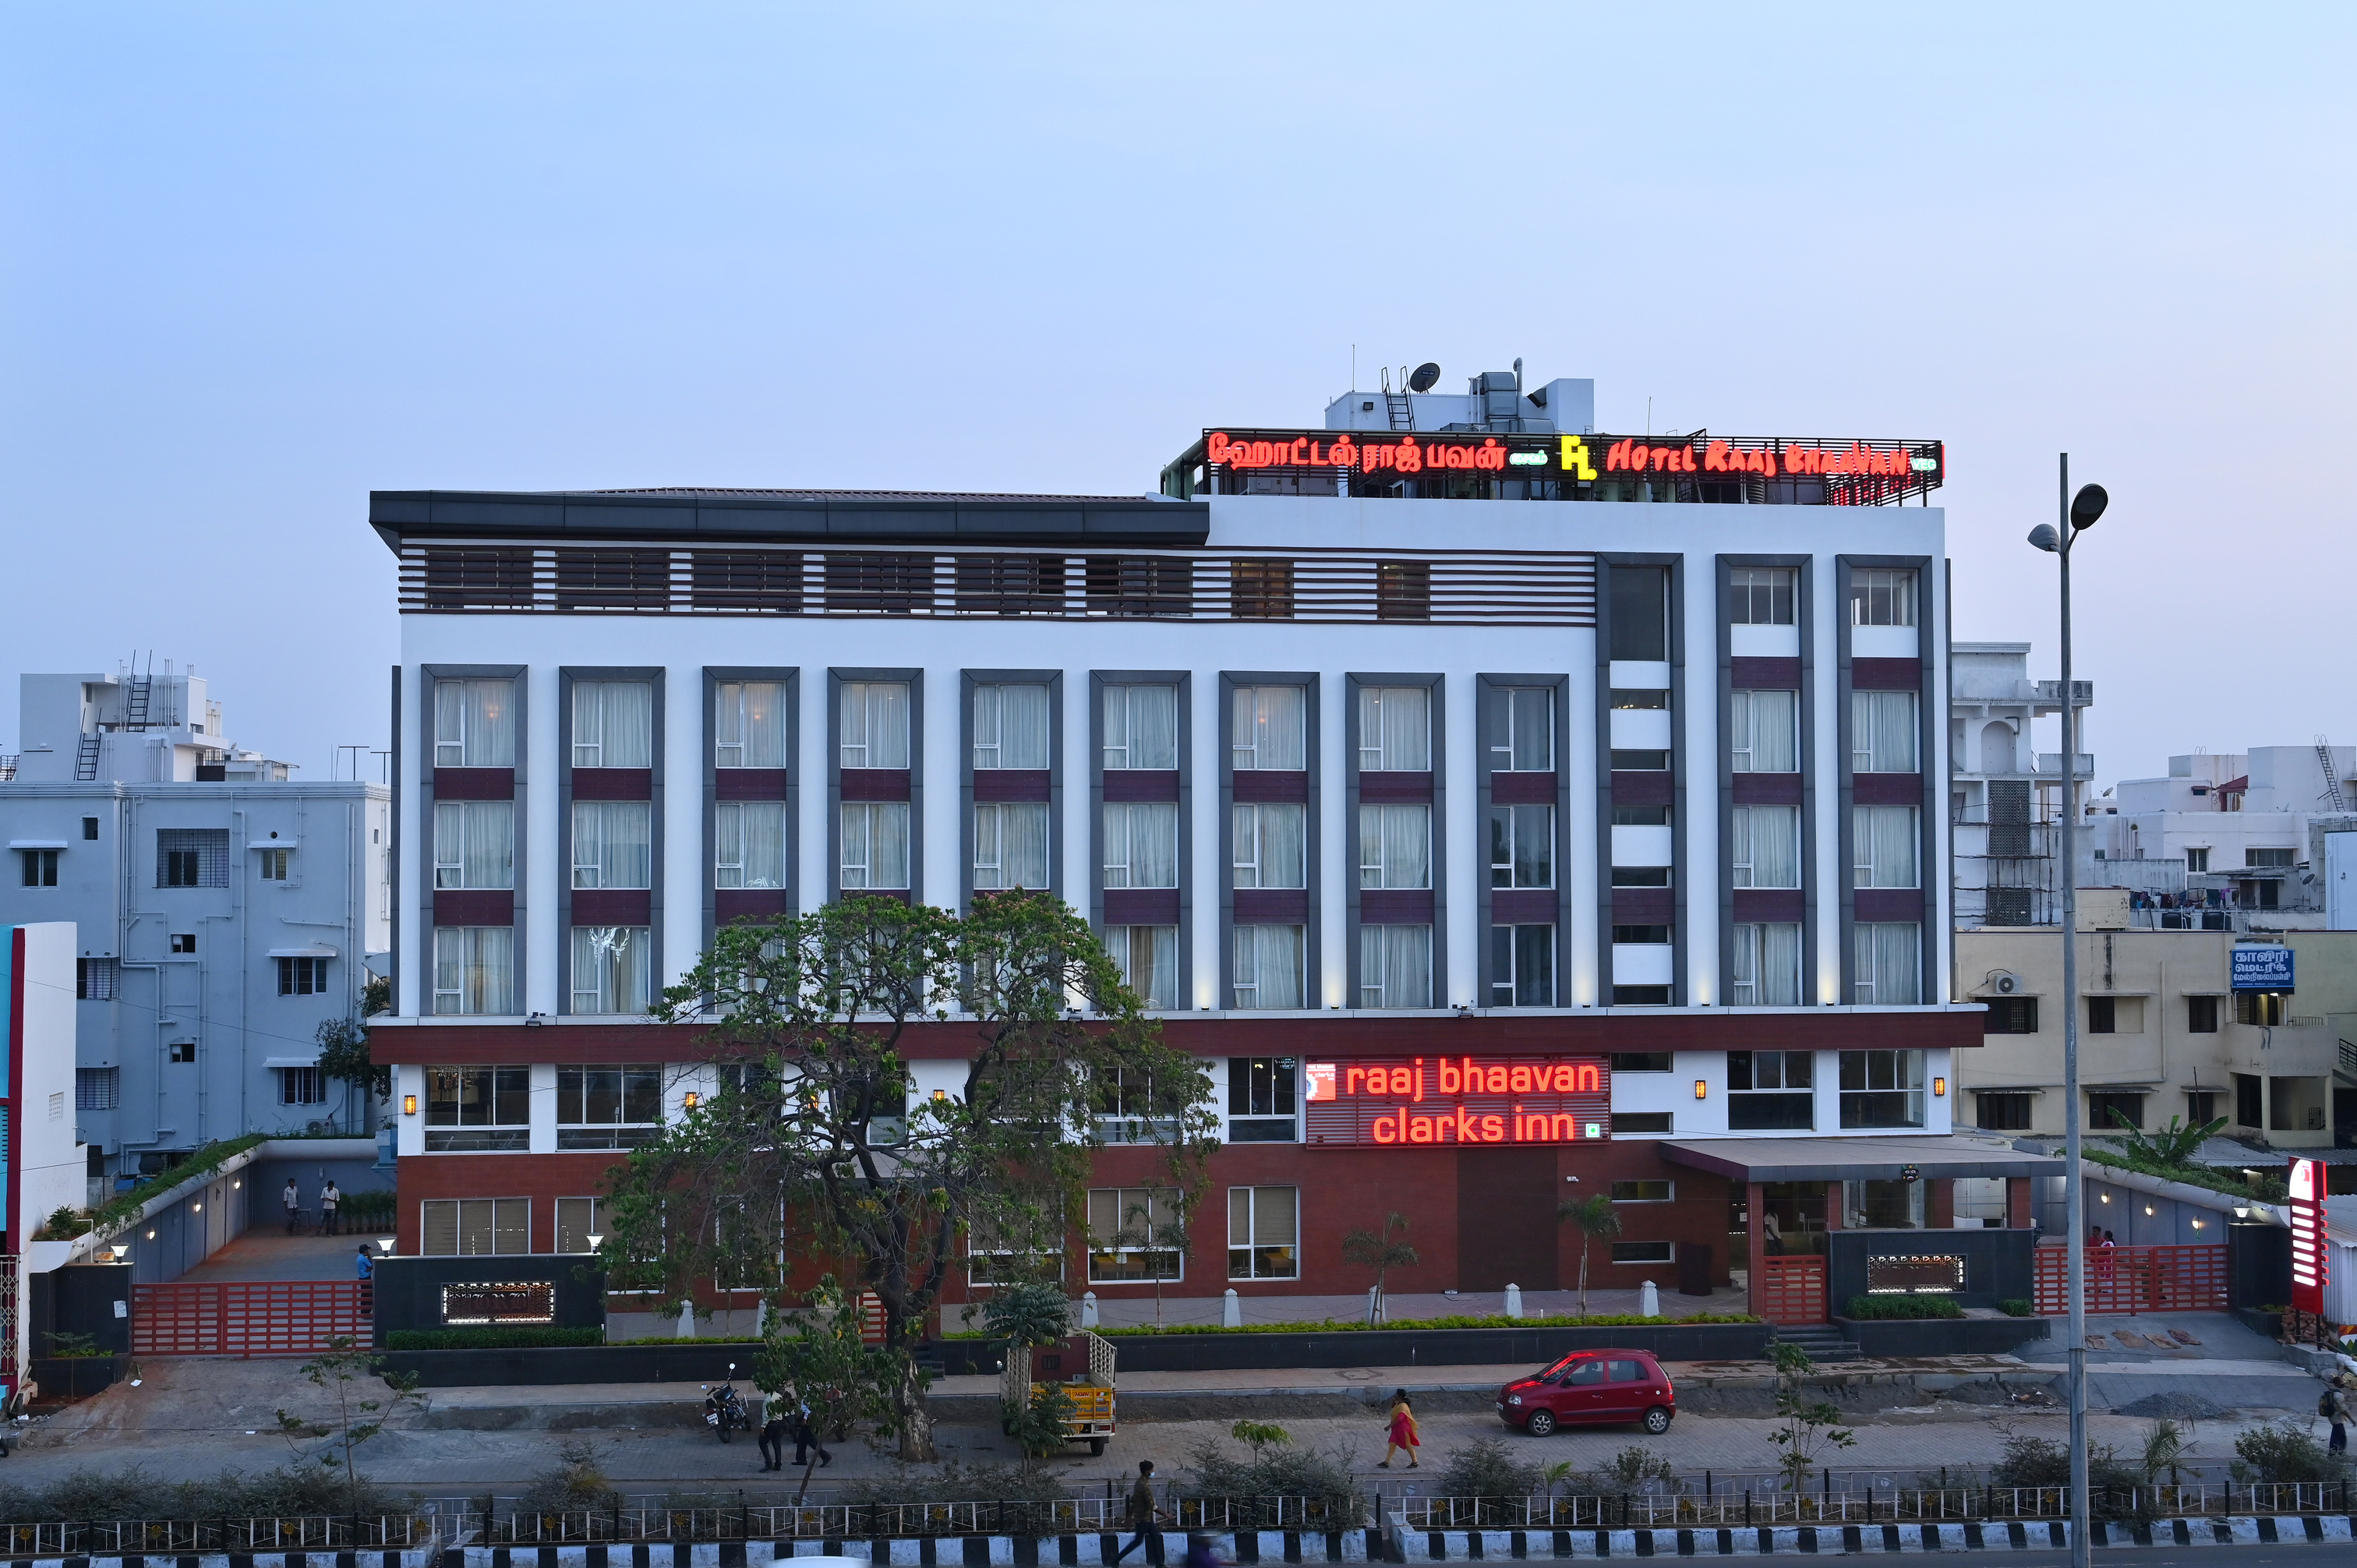 Raaj Bhaavan Clarks Inn